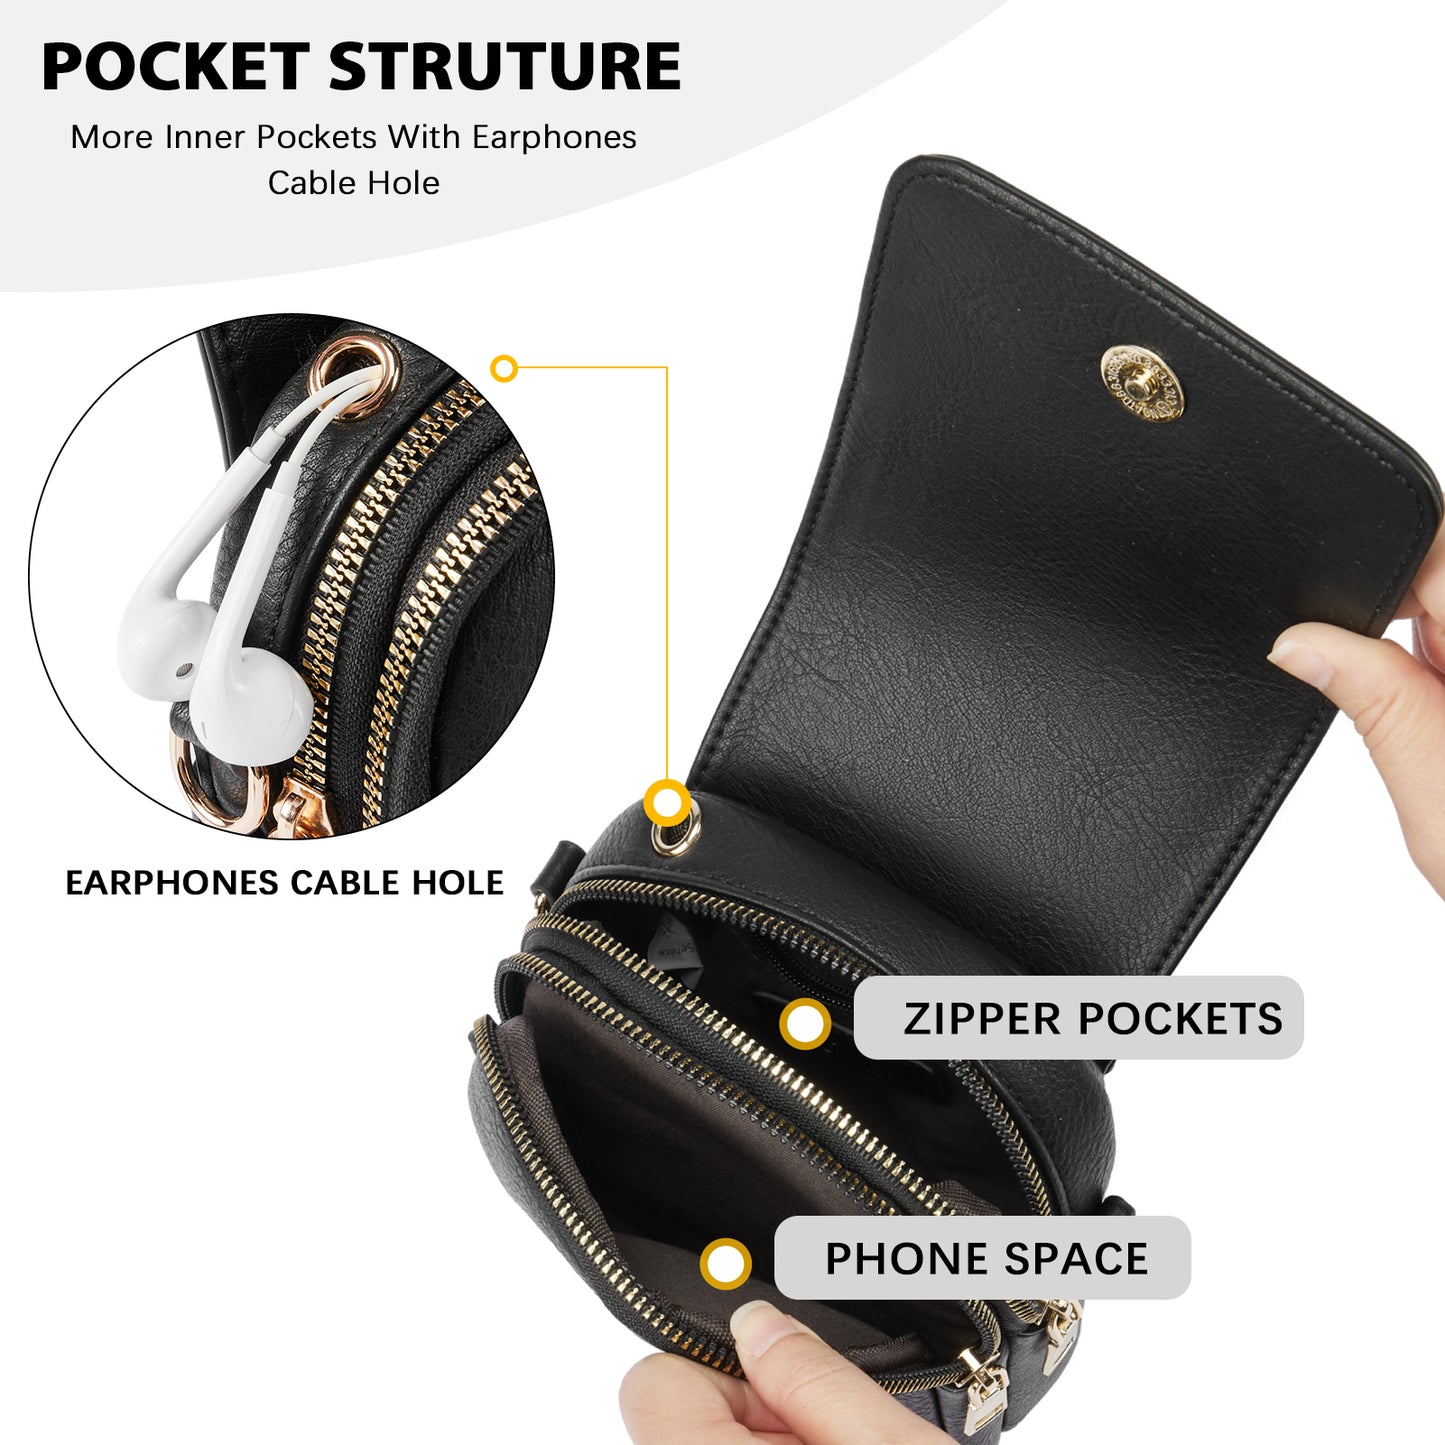 BOSTANTEN Small Crossbody Phone Bags for Women Trendy Shoulder Wallet Purses with Earphone Hole